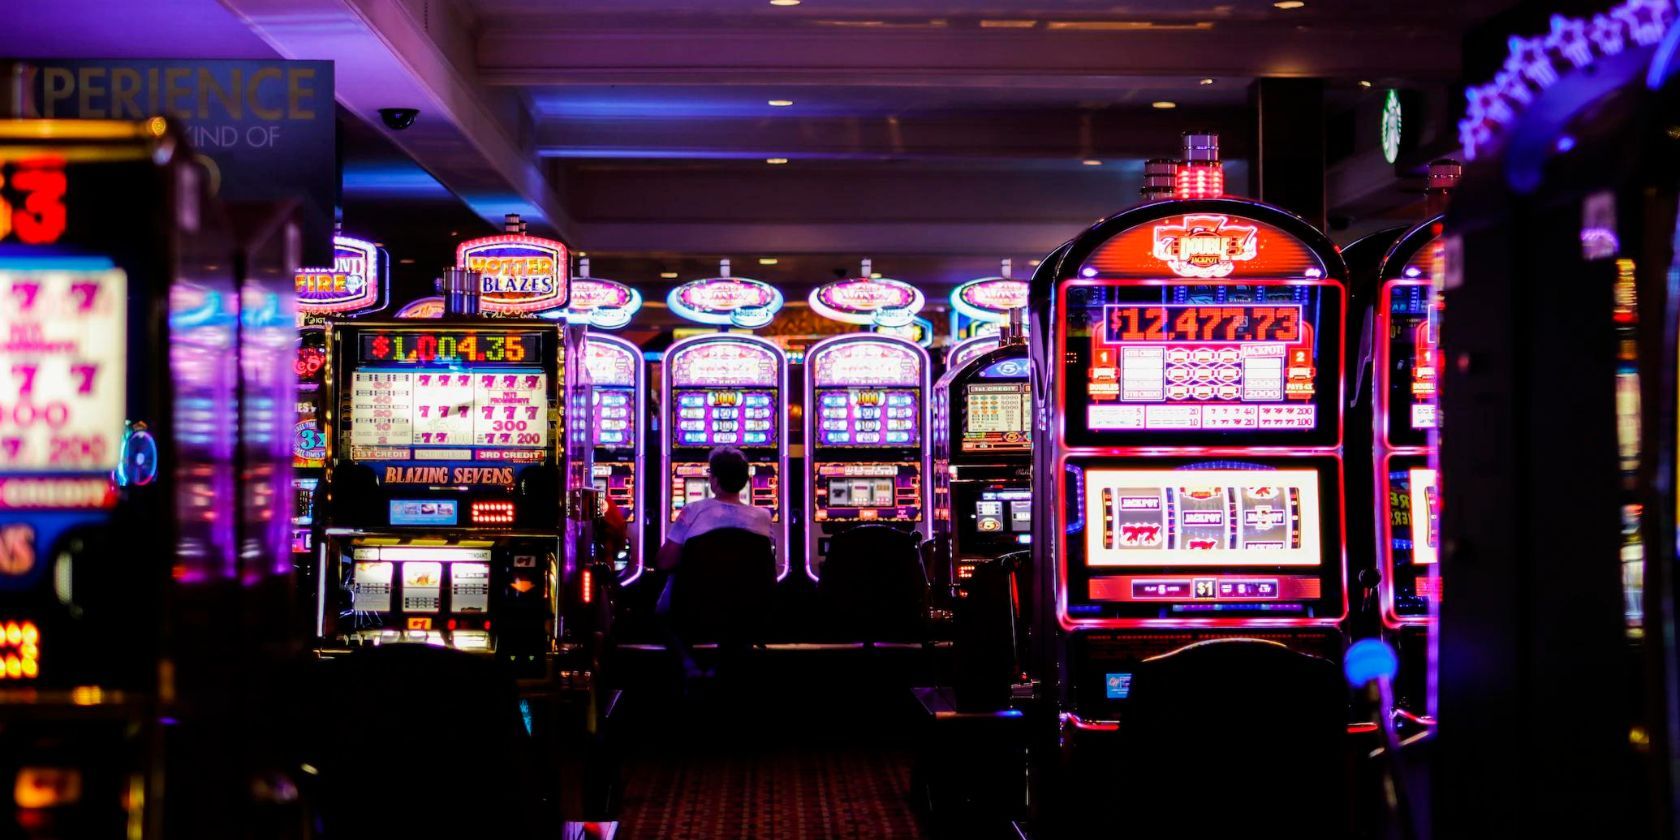 Slot machines in a dimly lit casino